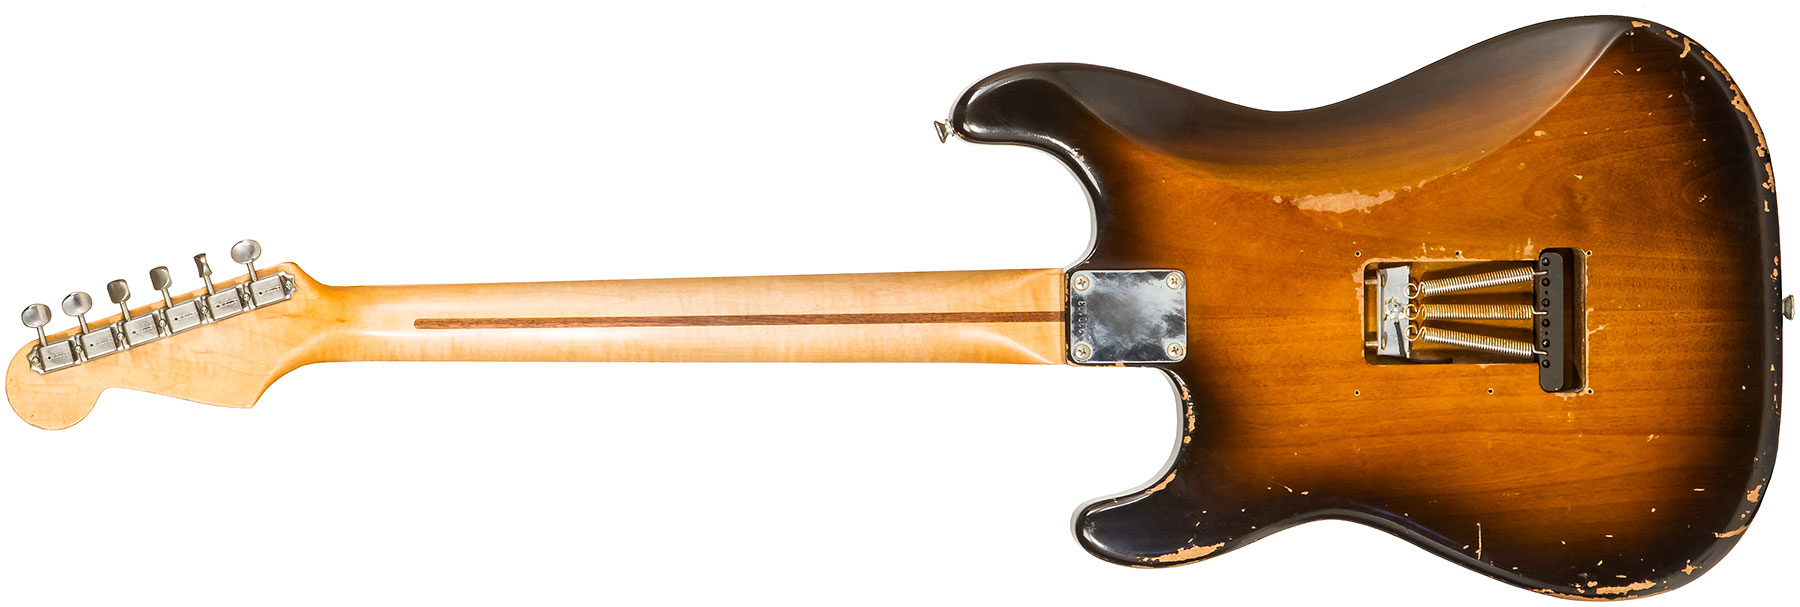 Rebelrelic S-series 54 3s Trem Mn #230103 - Medium Aged 2-tone Sunburst - Guitare Électrique Forme Str - Variation 1